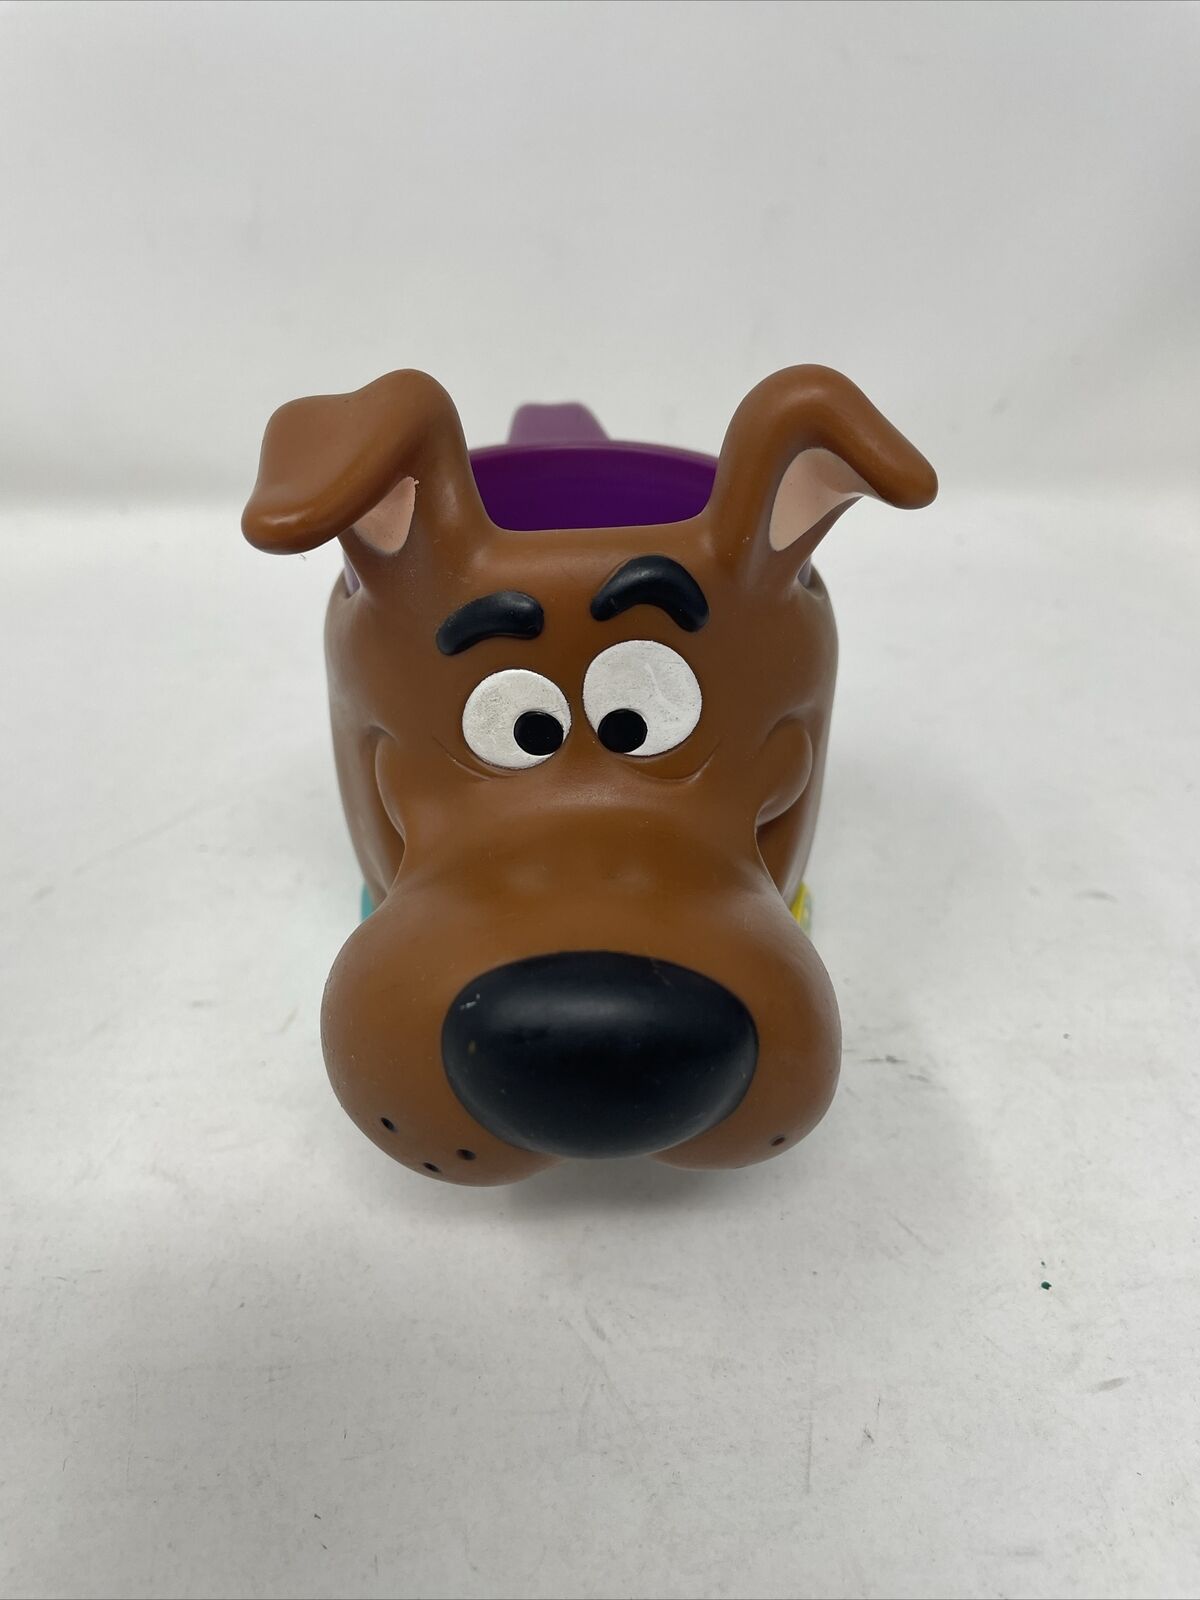 Scooby Doo Mug 1998 Rare 3d Cup Kids Cartoon Hard Plastic 90s Toy Applause